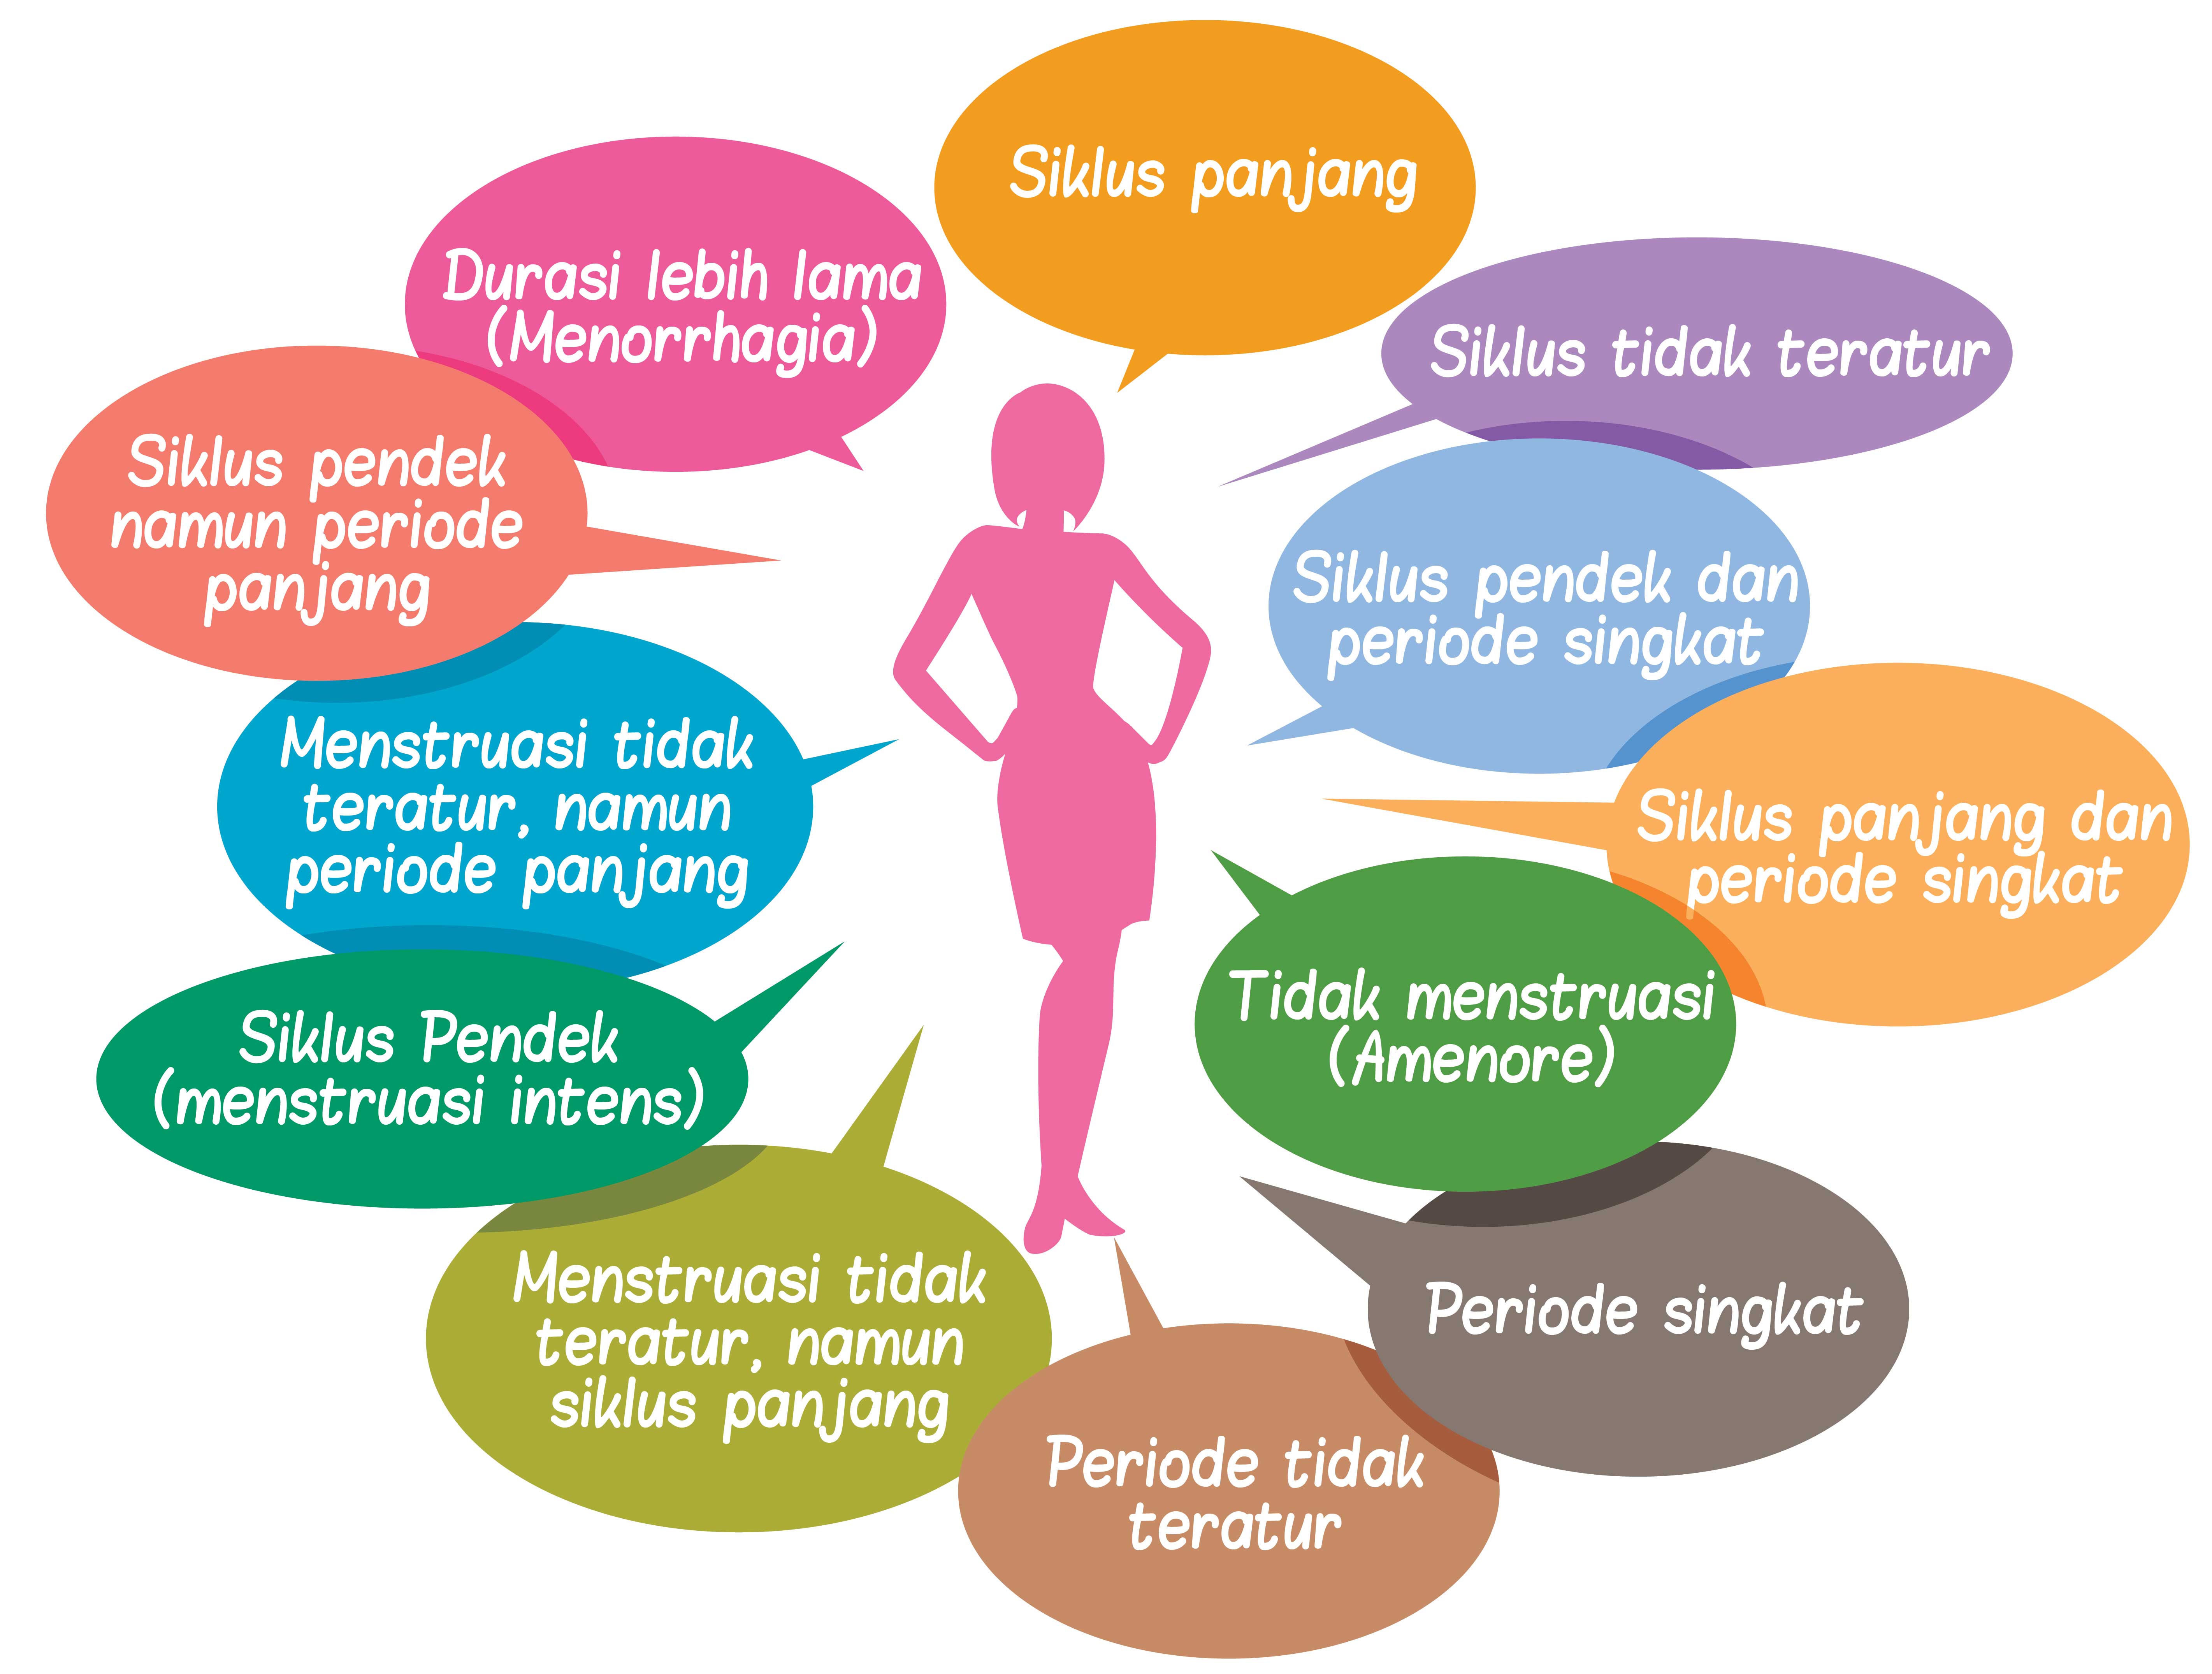 Statistics on menstrual cycles